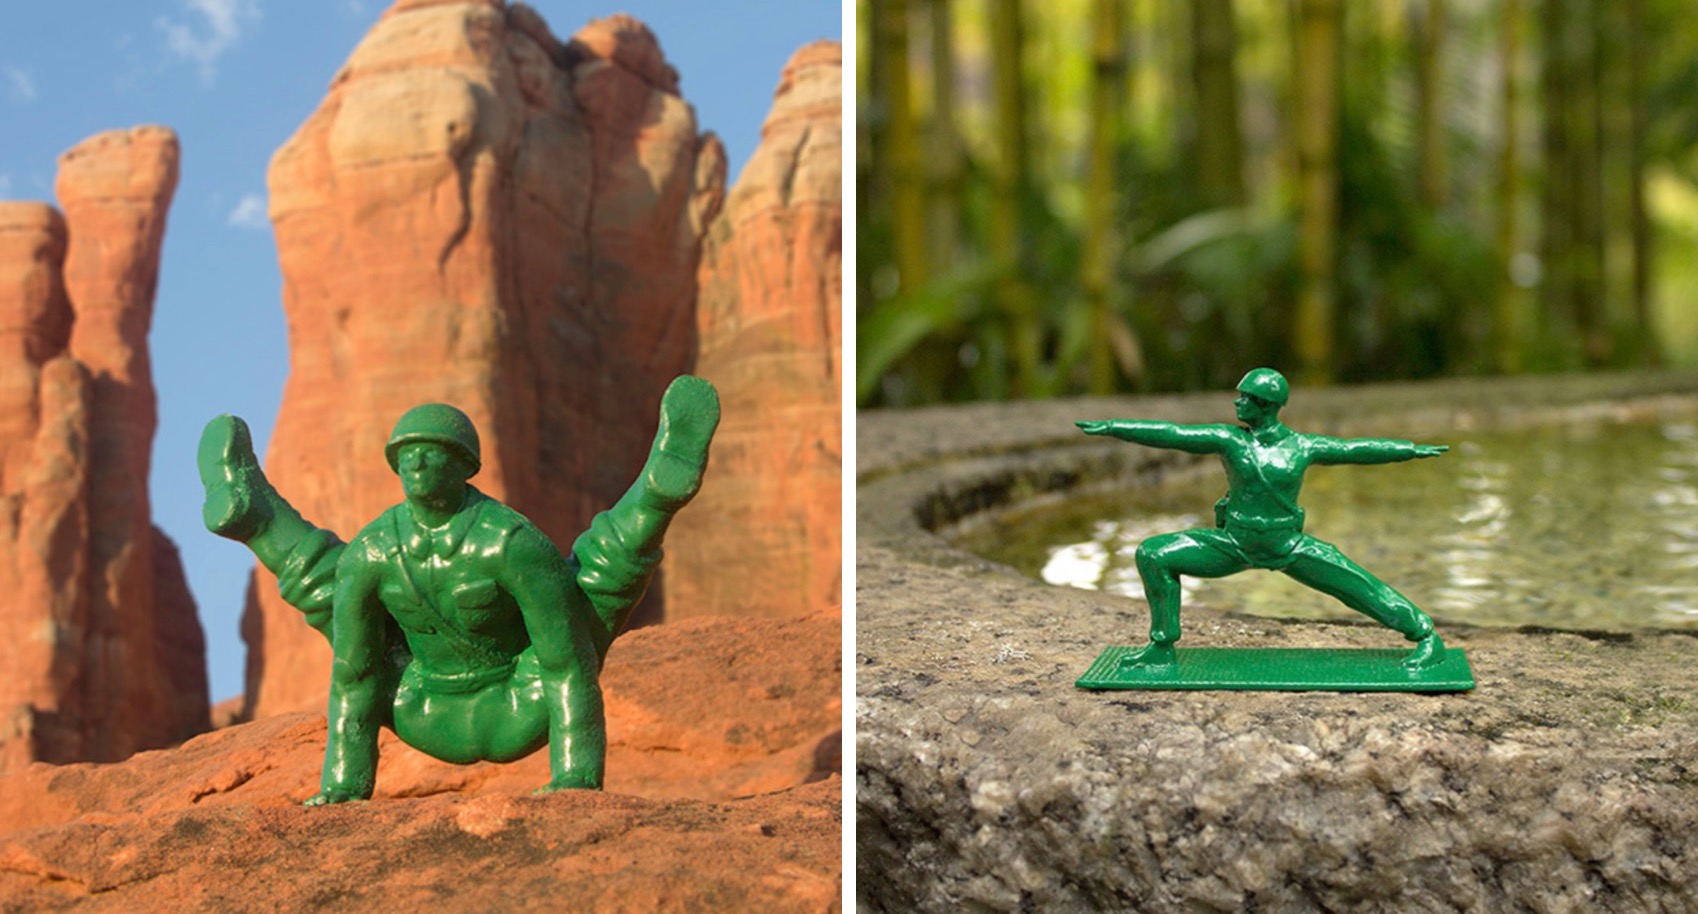 Artist Creates Classic Green Army Men in Yoga Poses